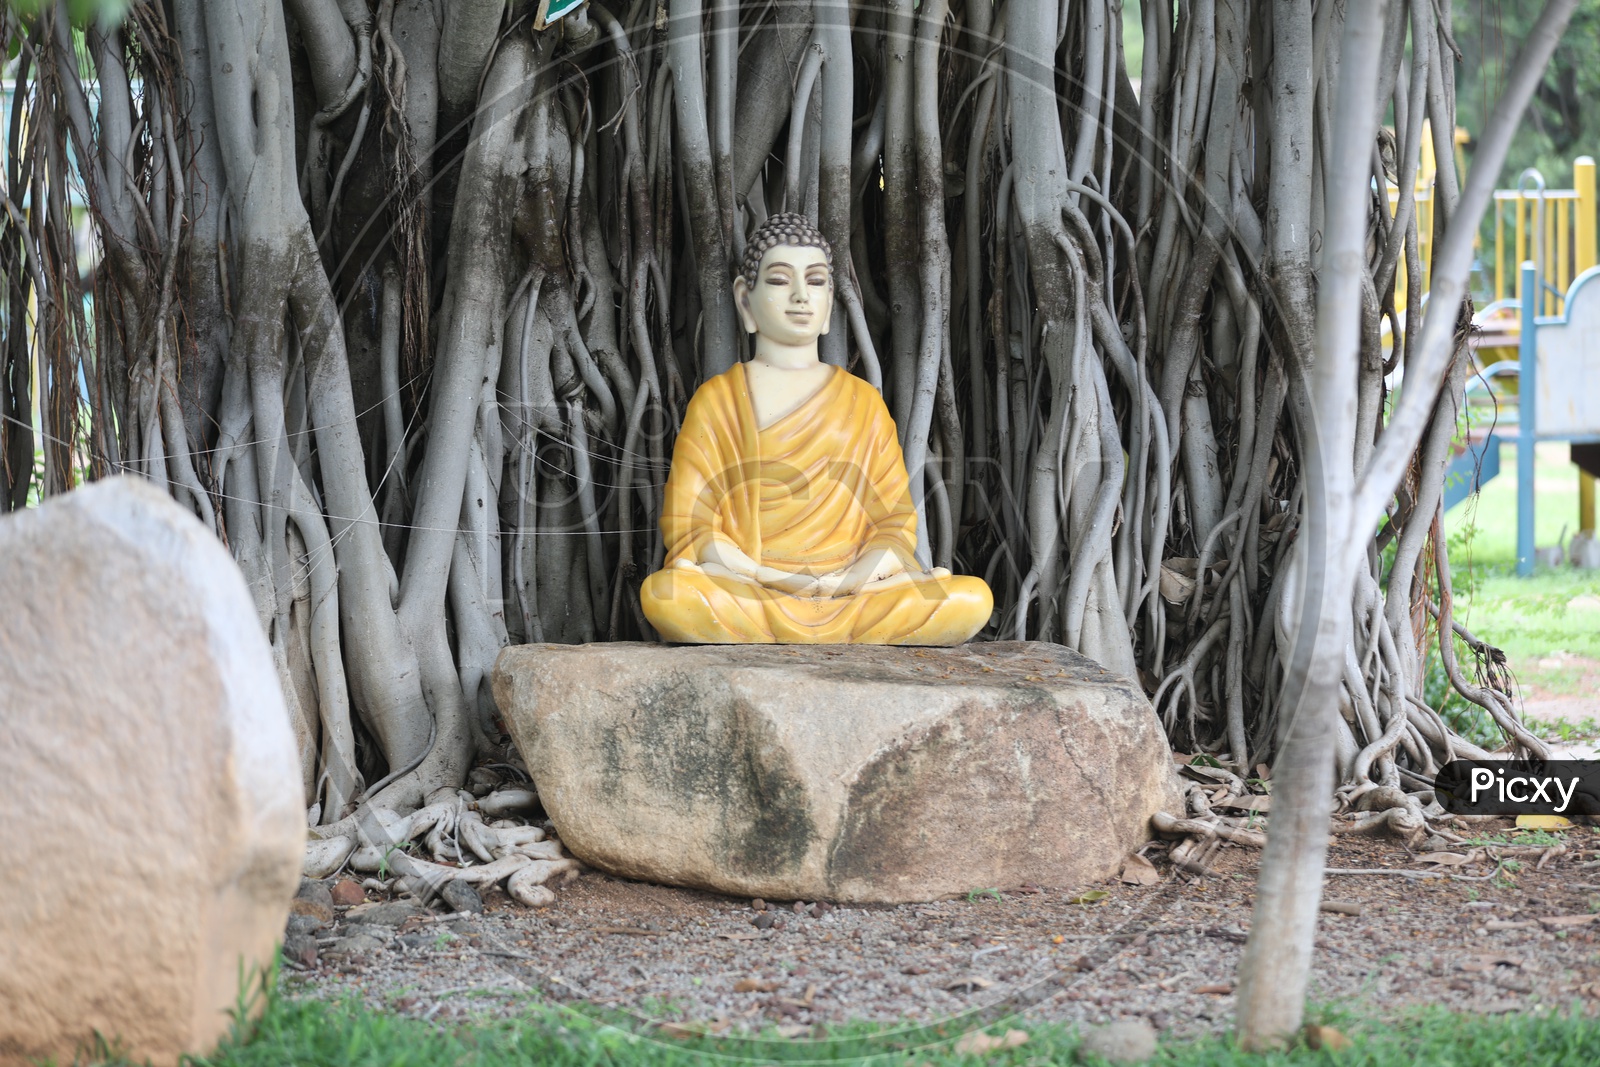 Gautham Buddha Statue Under a Banyan Tree in a Park